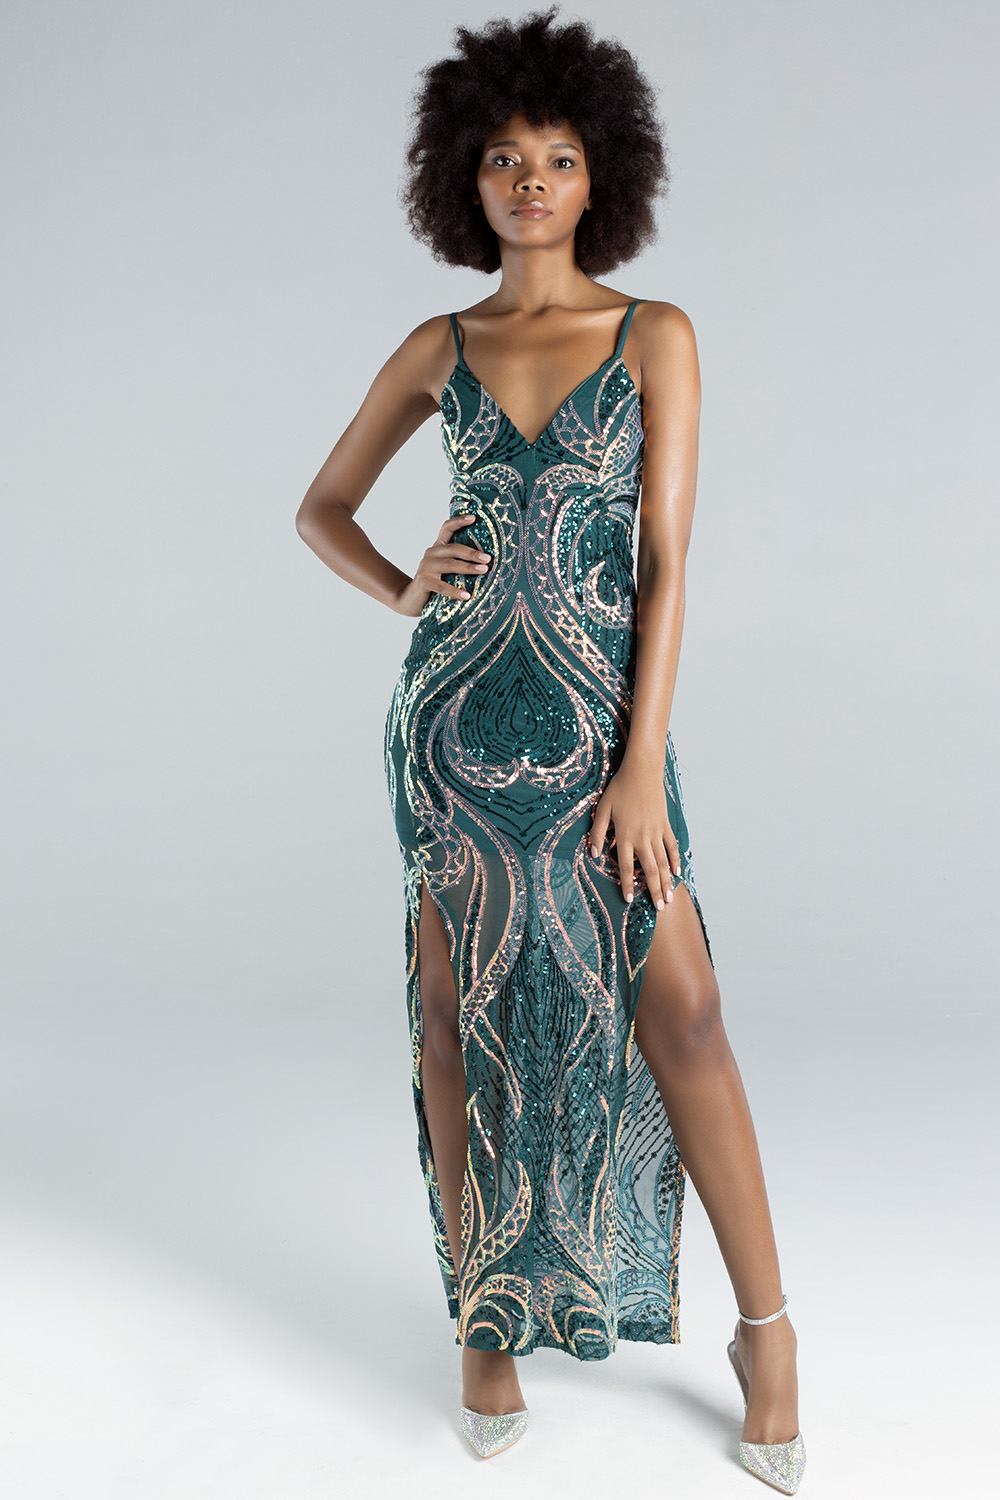 Ladies Sequin Strap Maxi Dress - Emerald